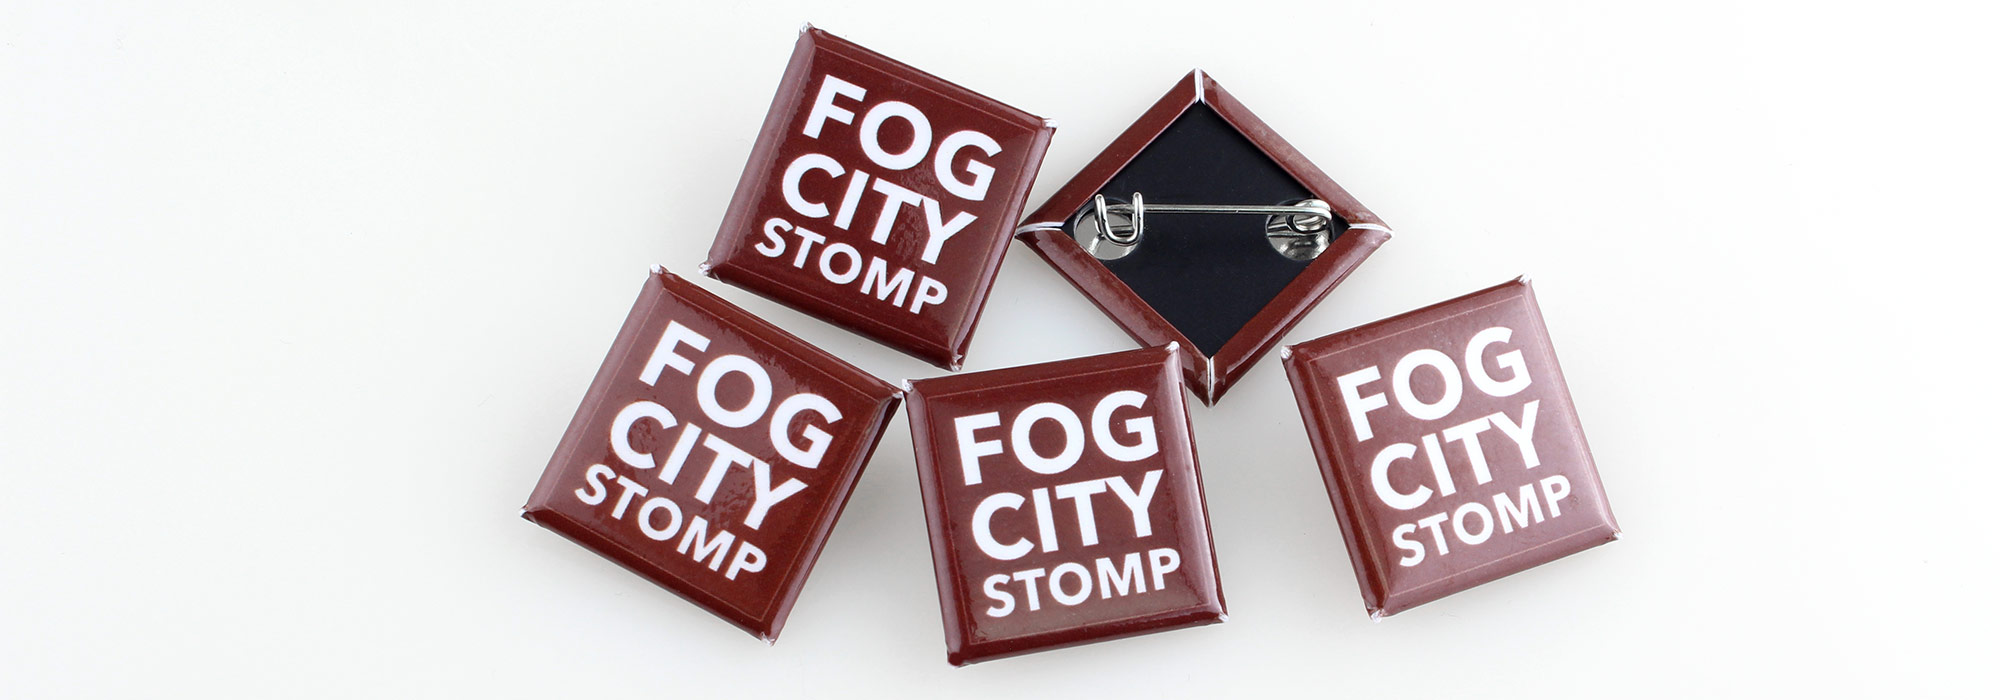 Square Custom Buttons Fog City Stomp